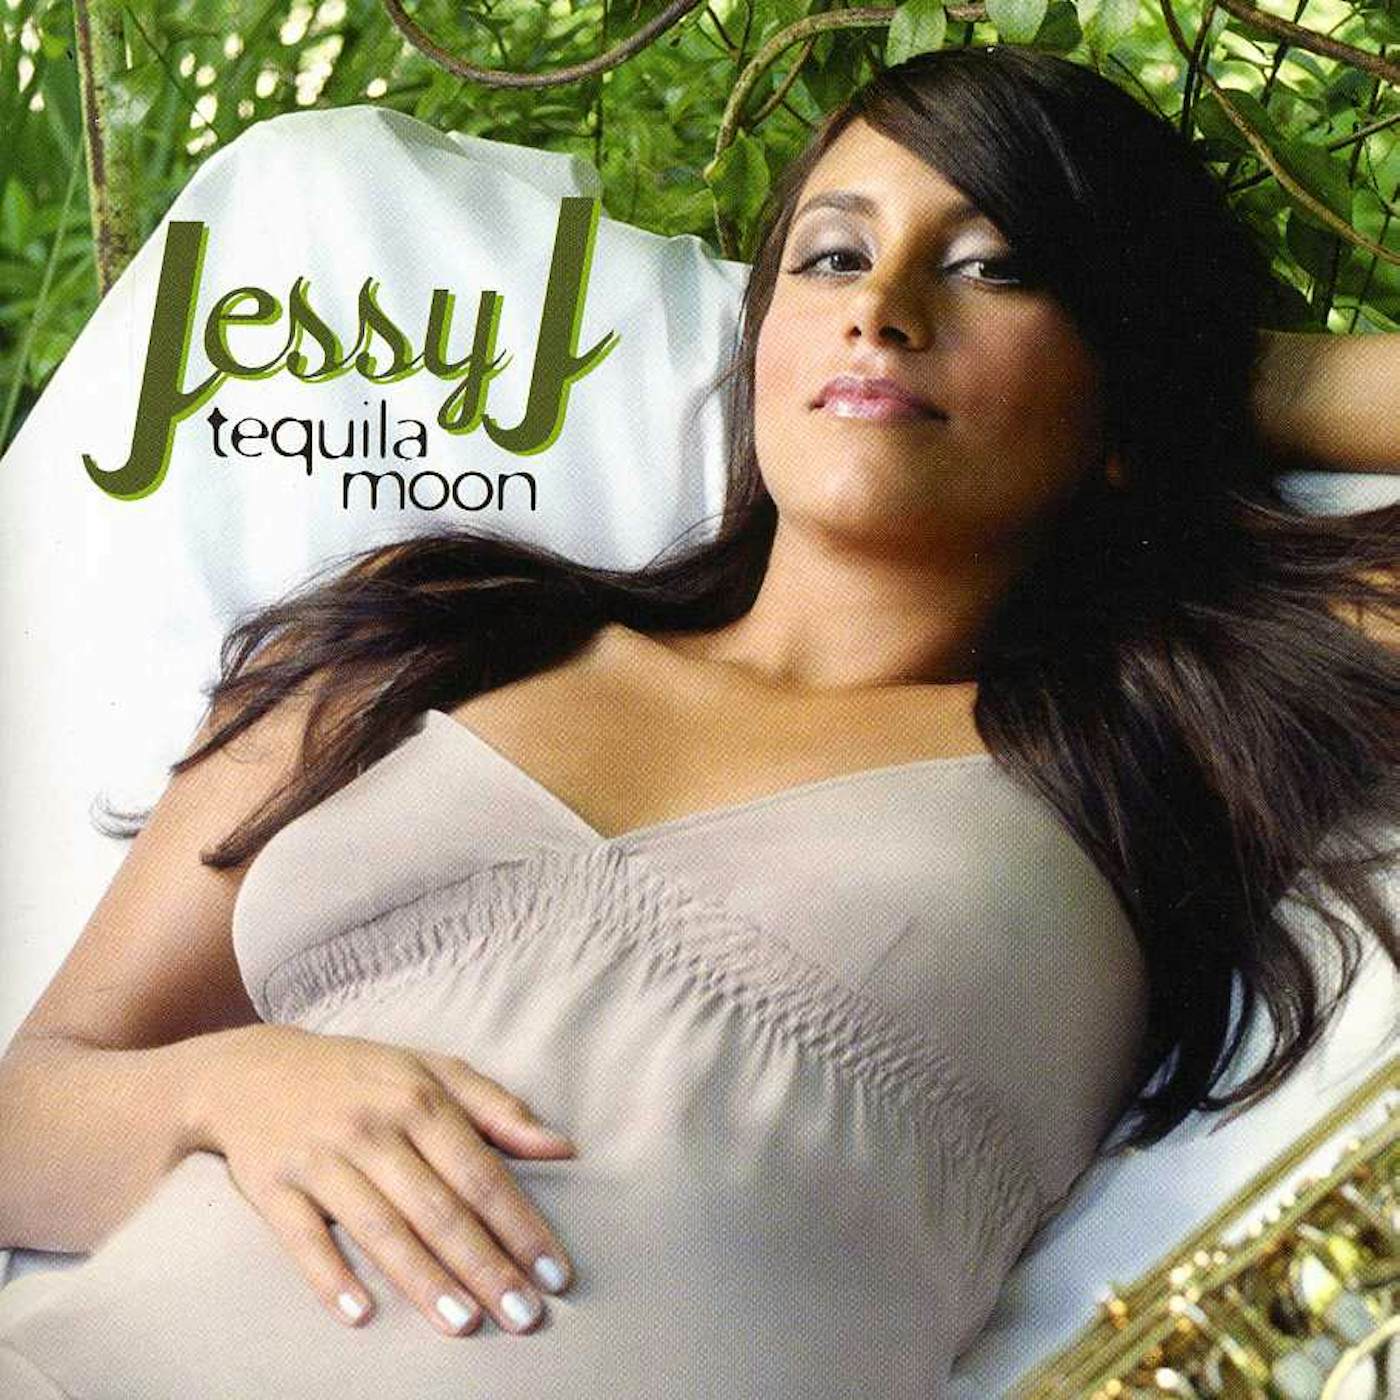 Jessy J TEQUILA MOON CD